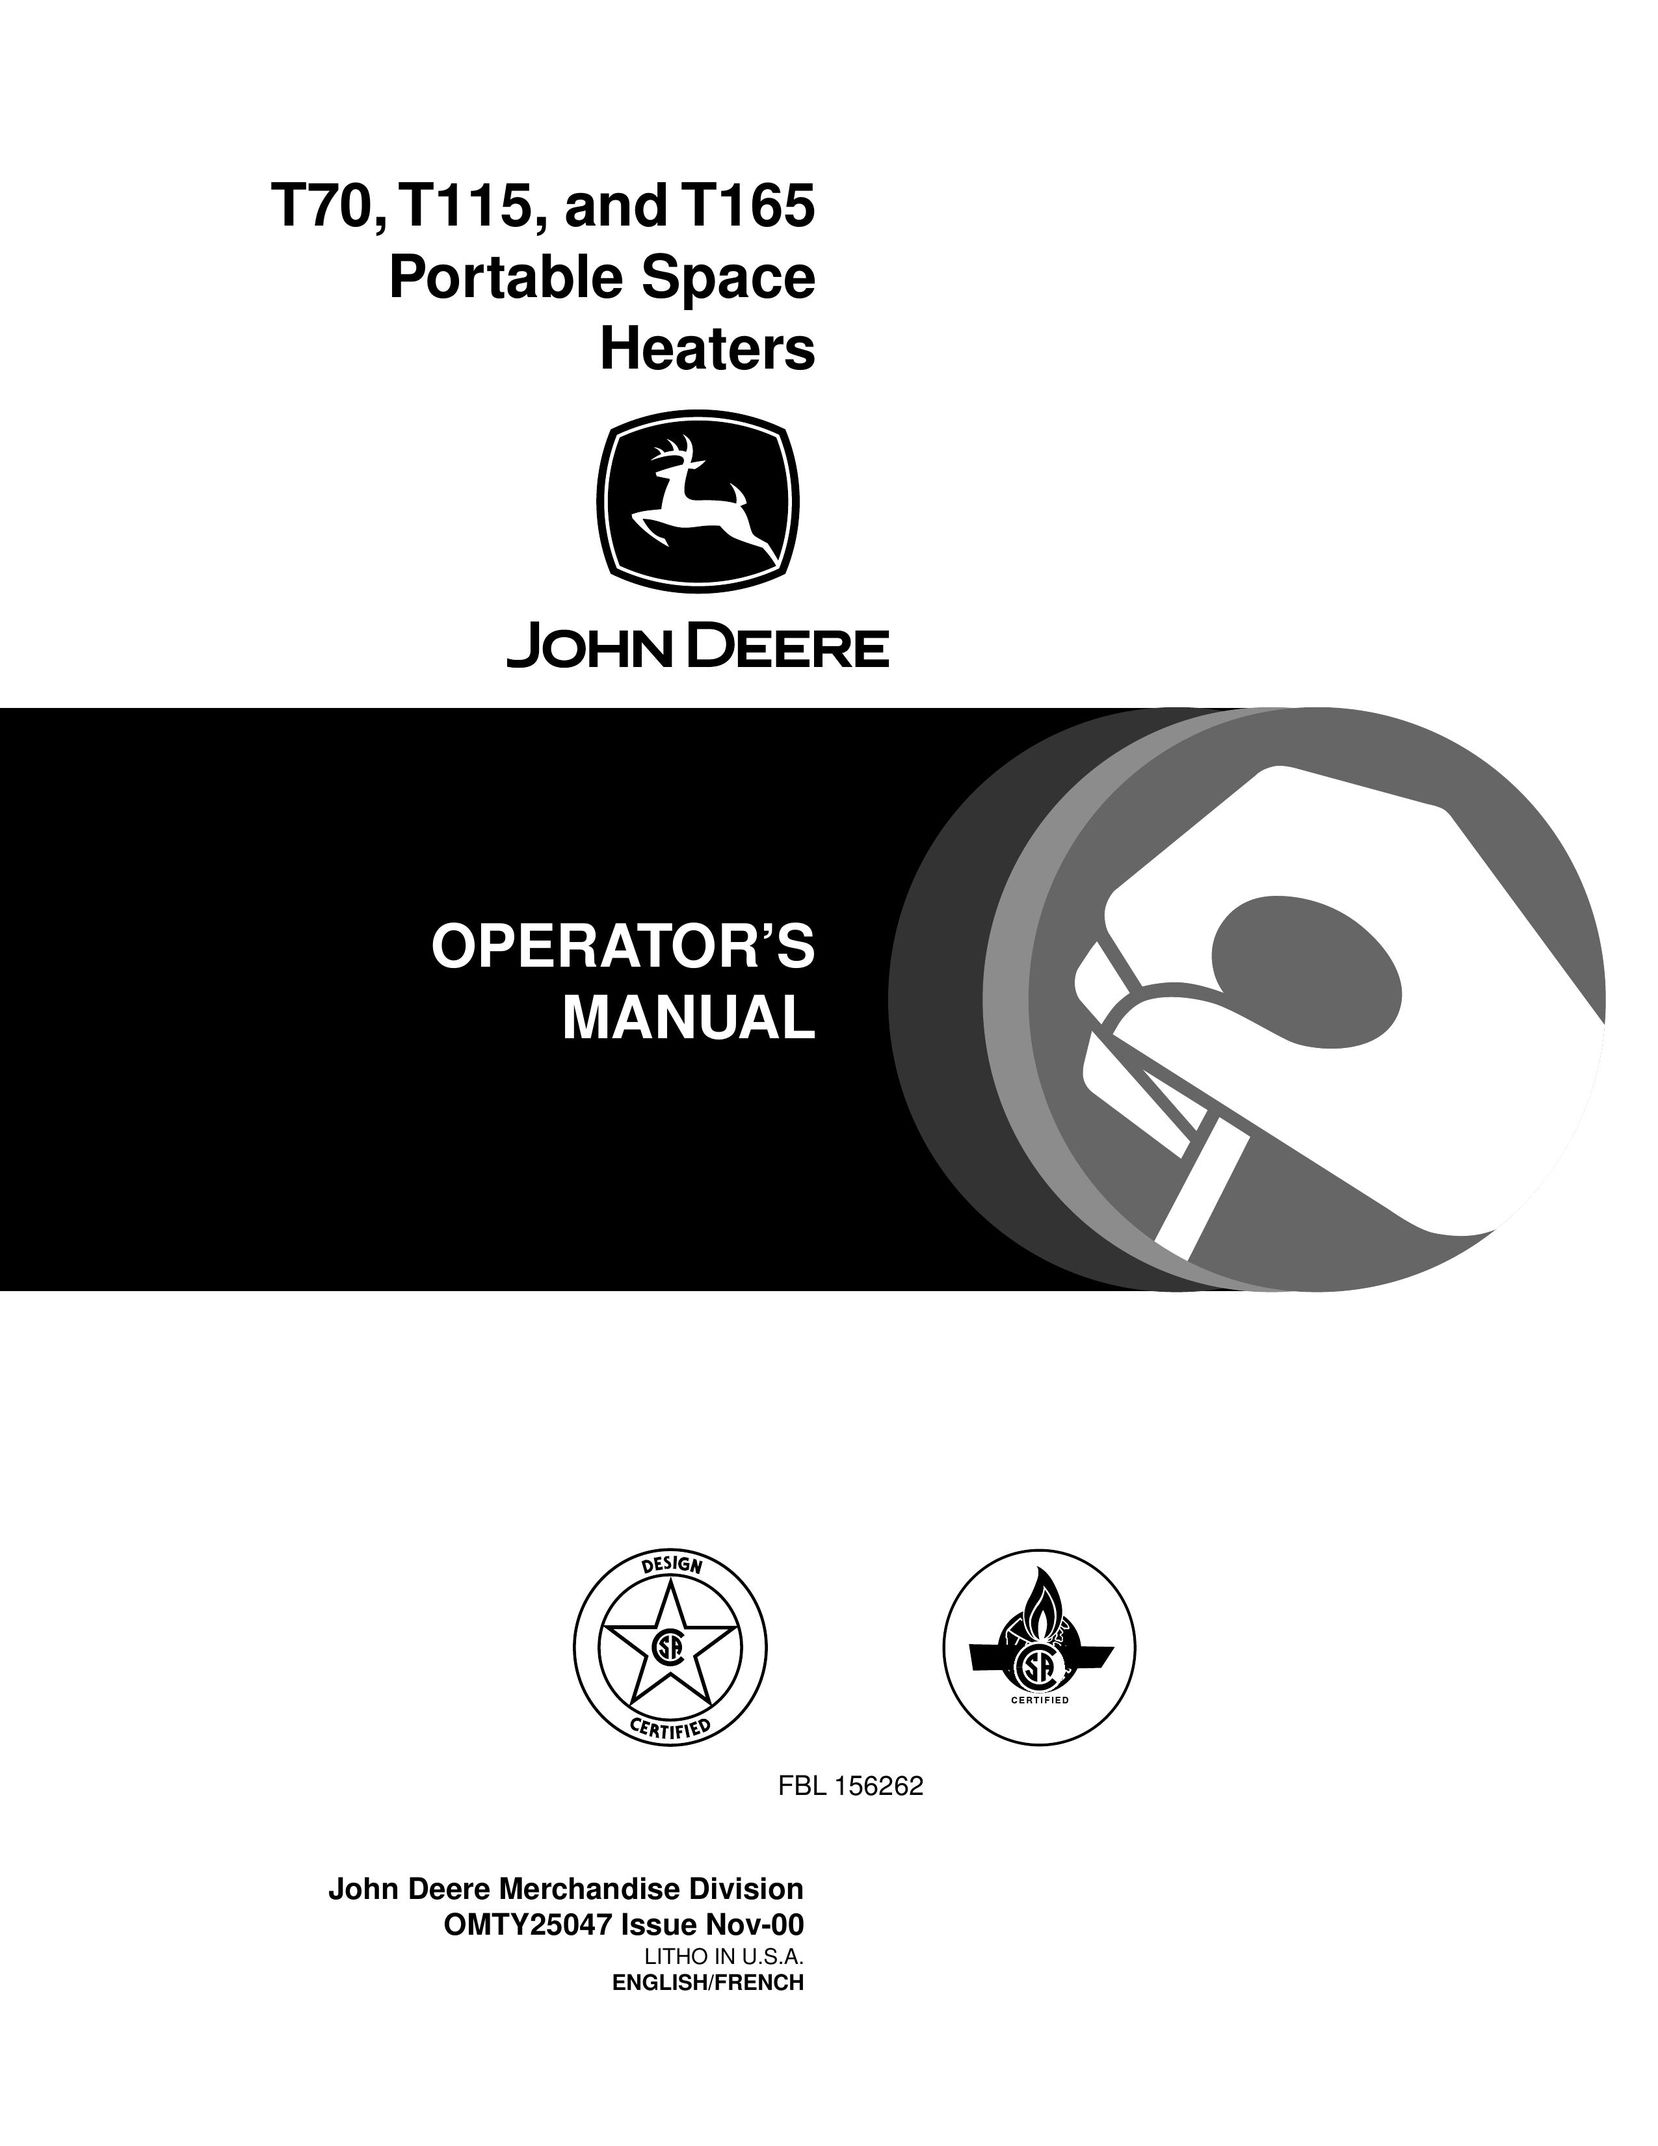 John Deere and T165 Electric Heater User Manual